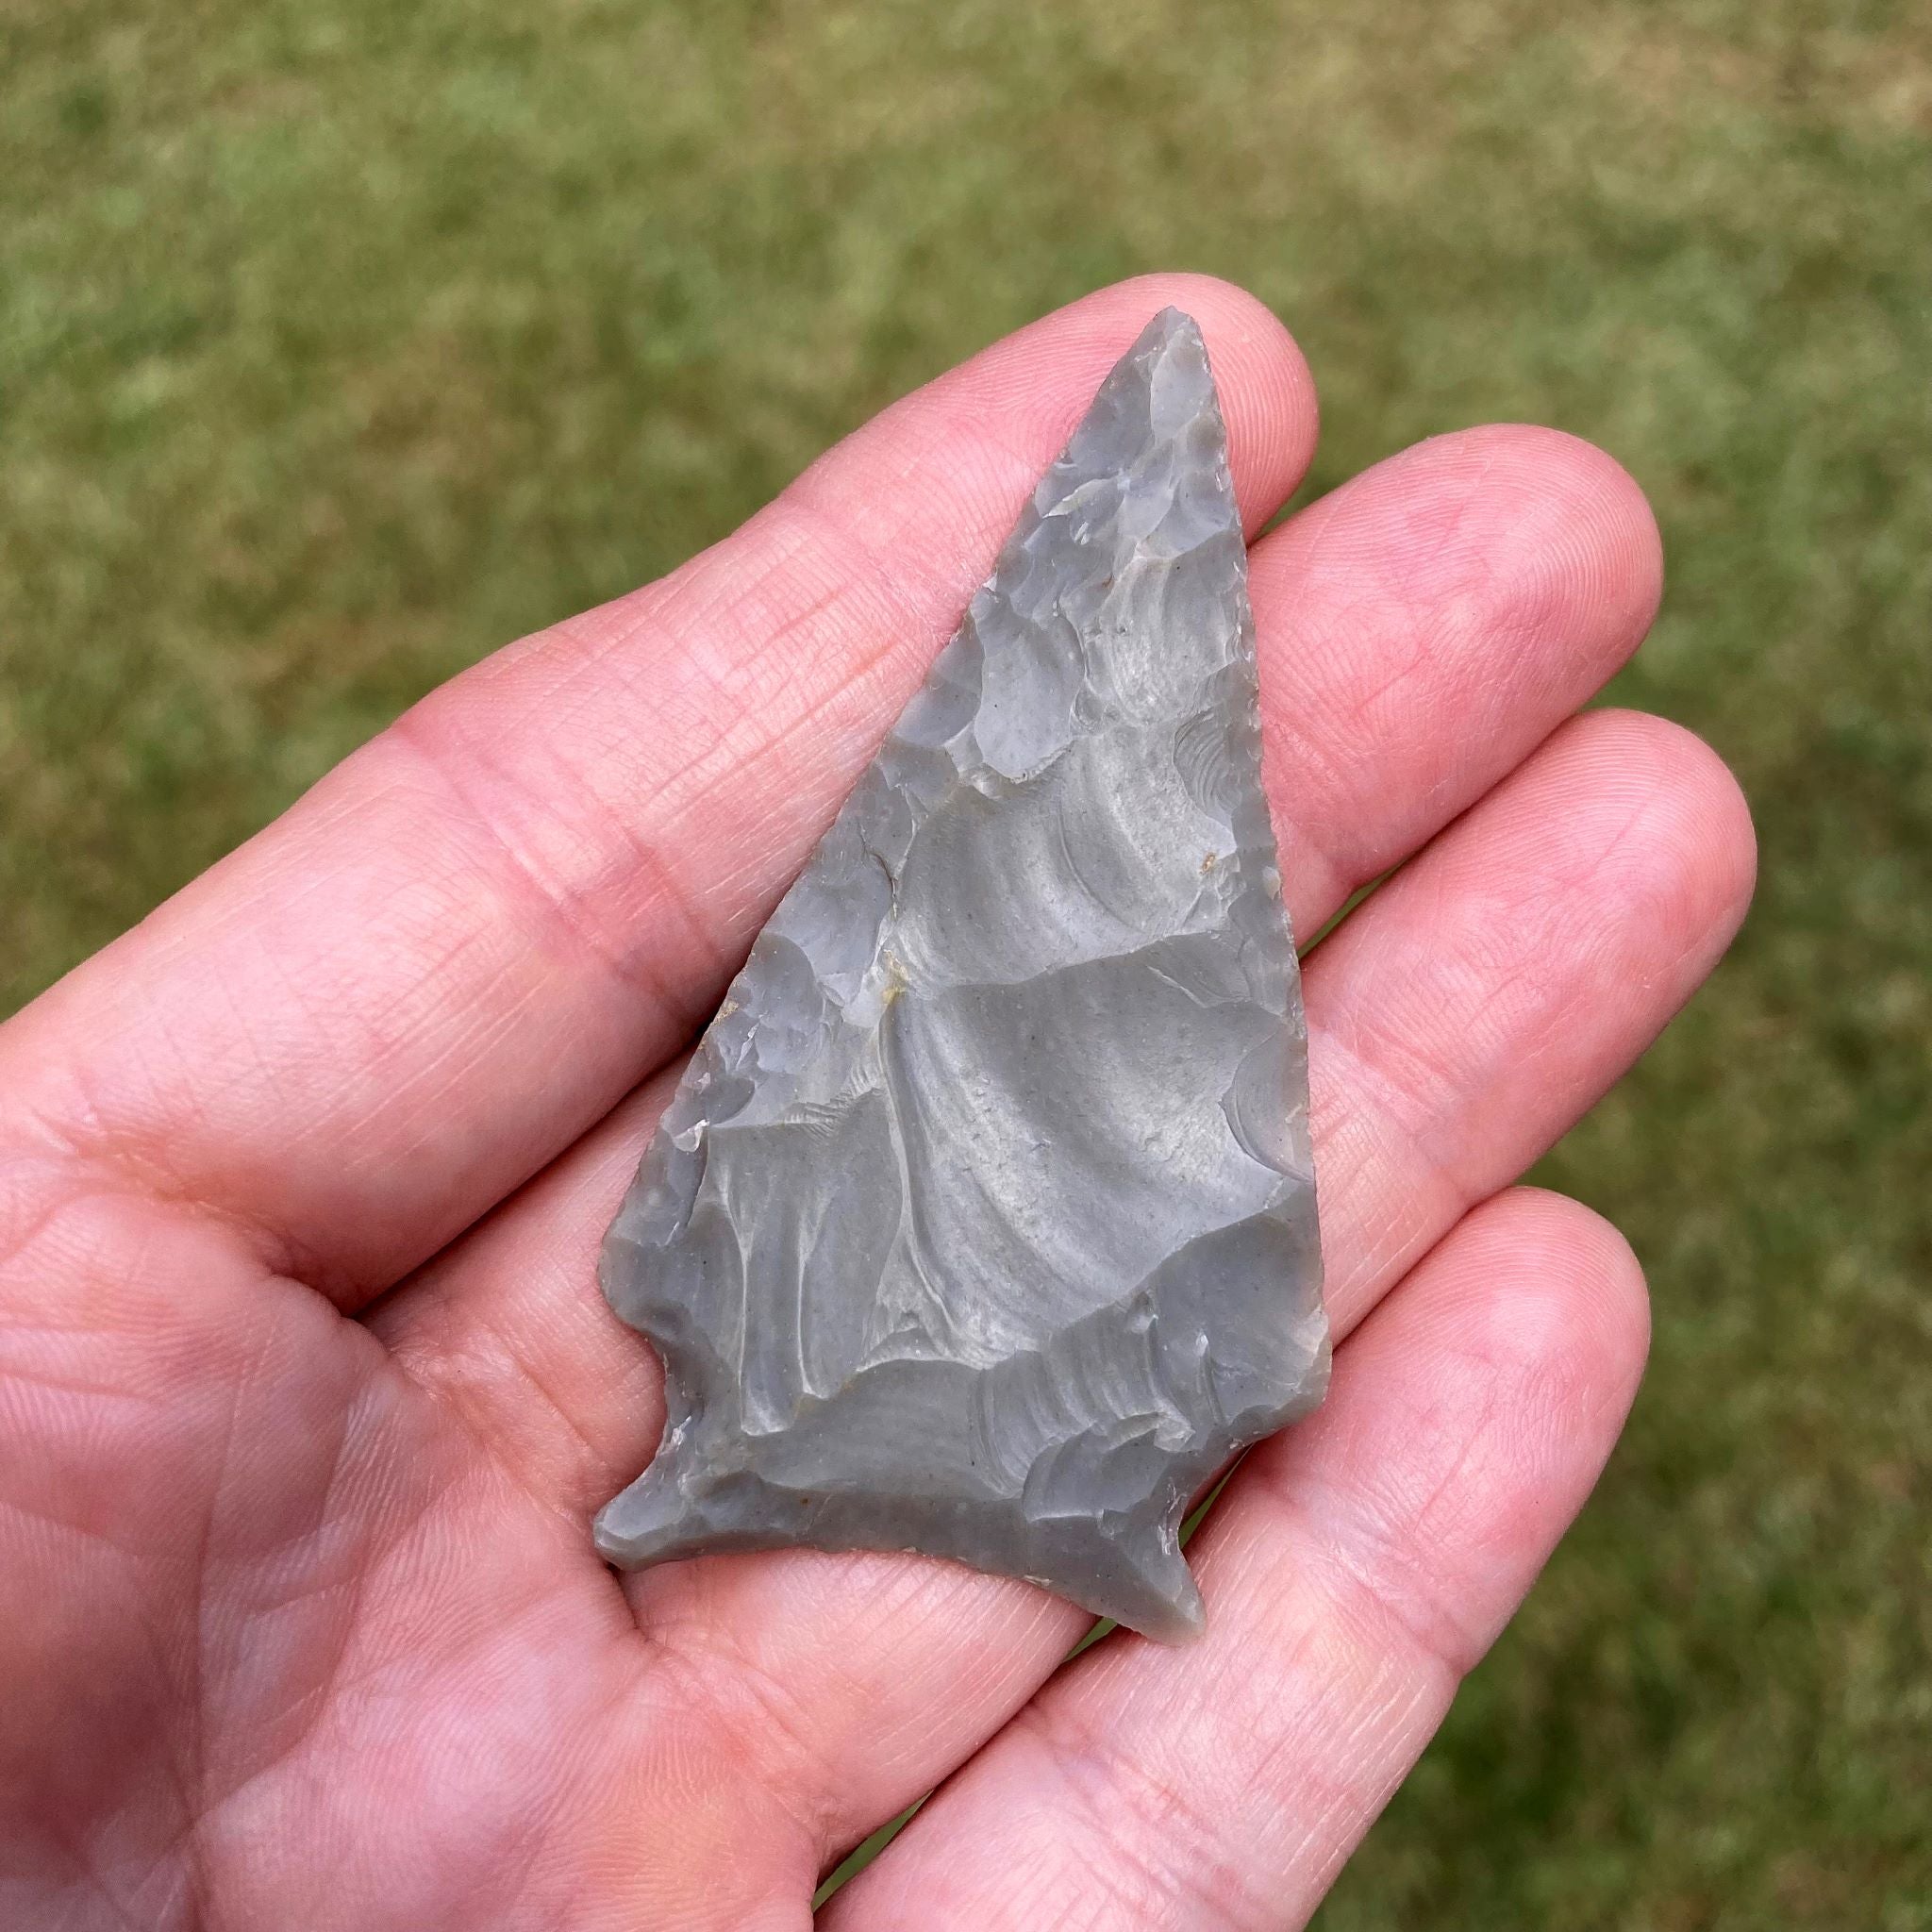 Side-notch replica arrowhead